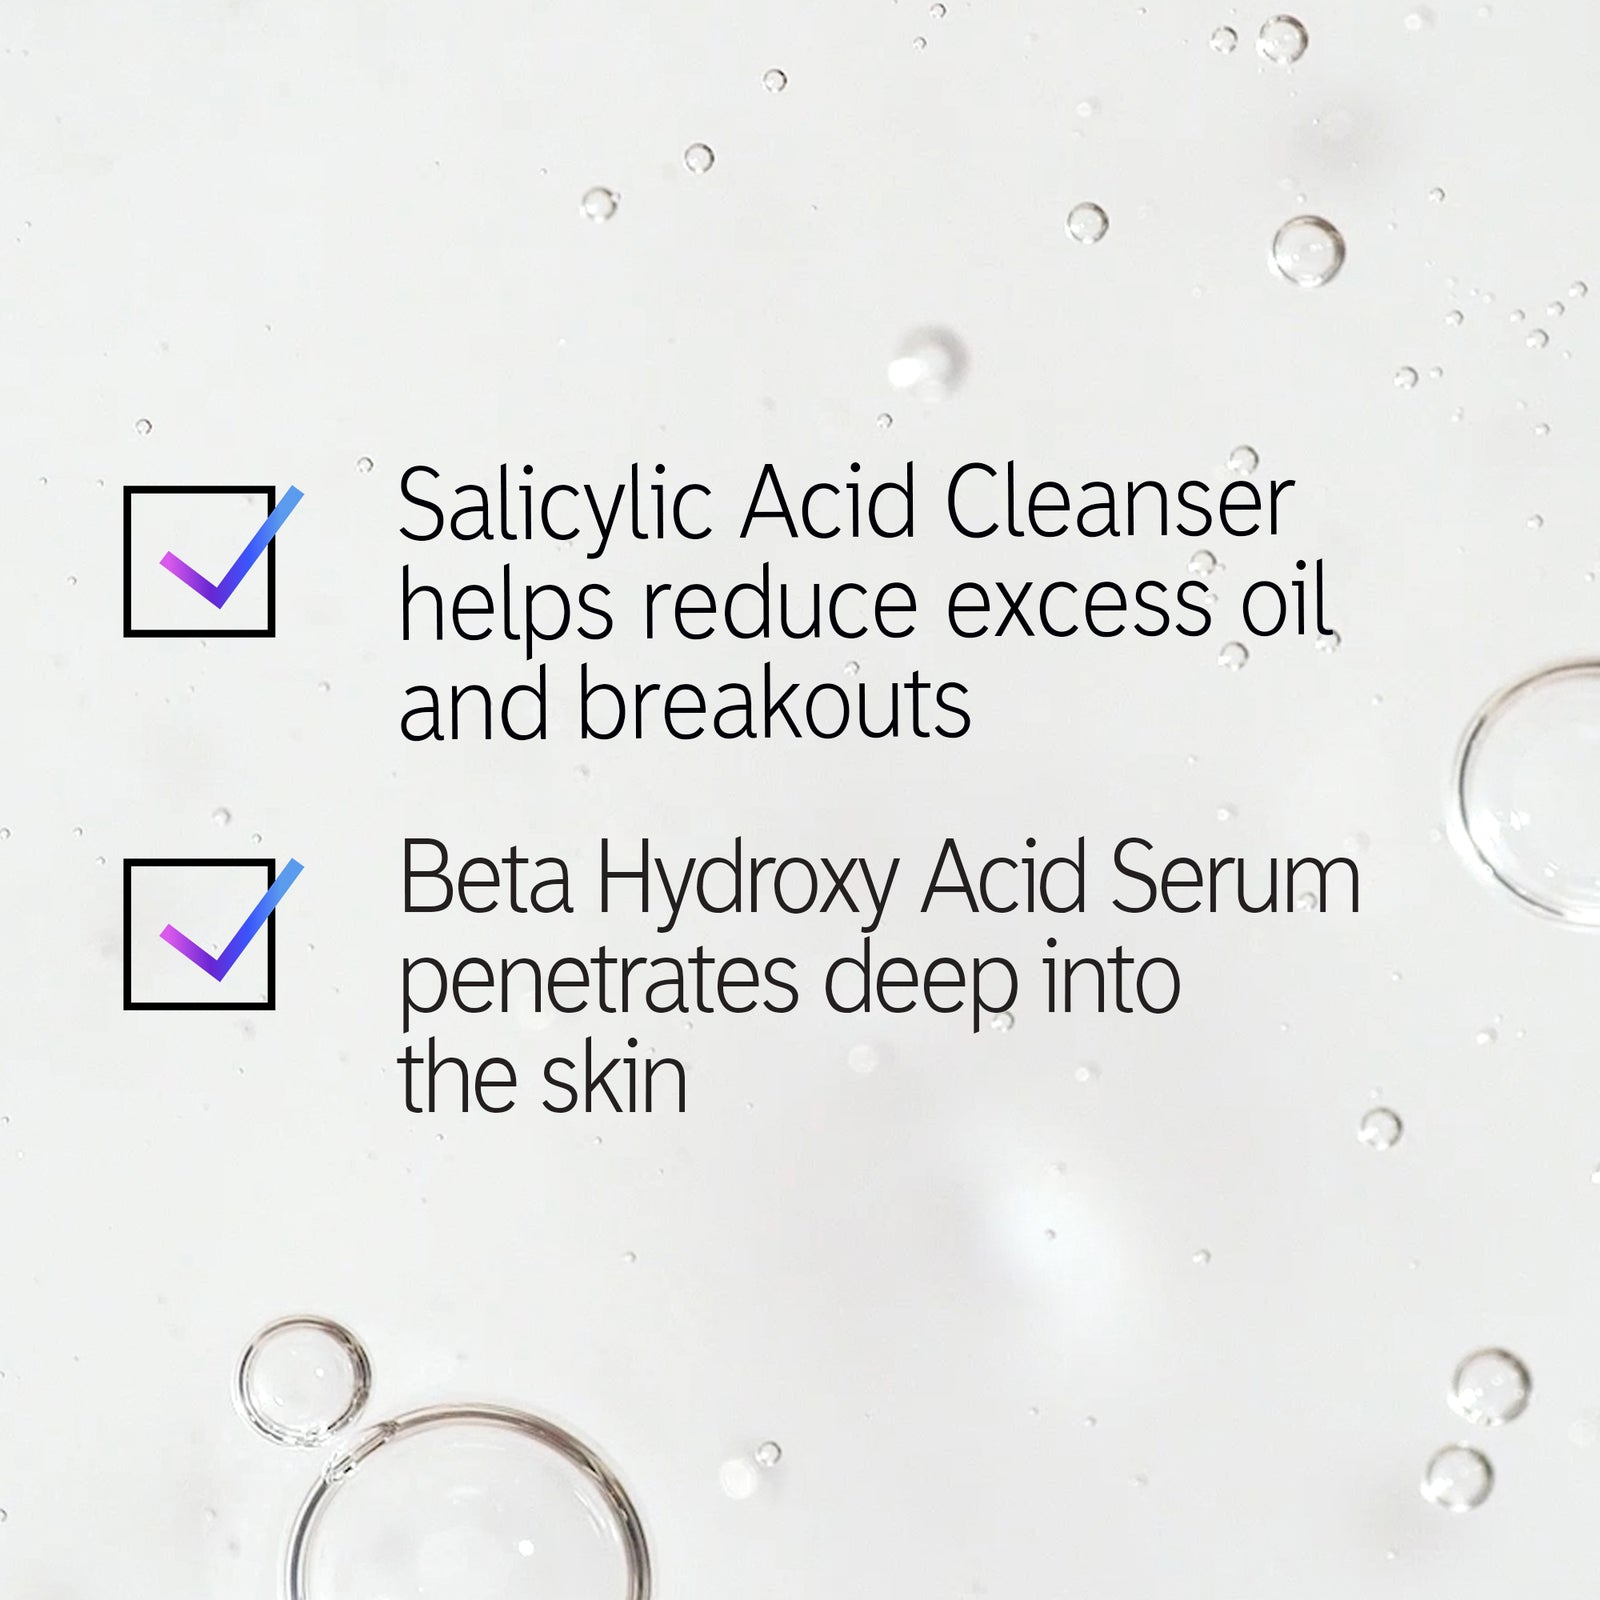 Deep Cleanse Duo ingredient benefit checklist